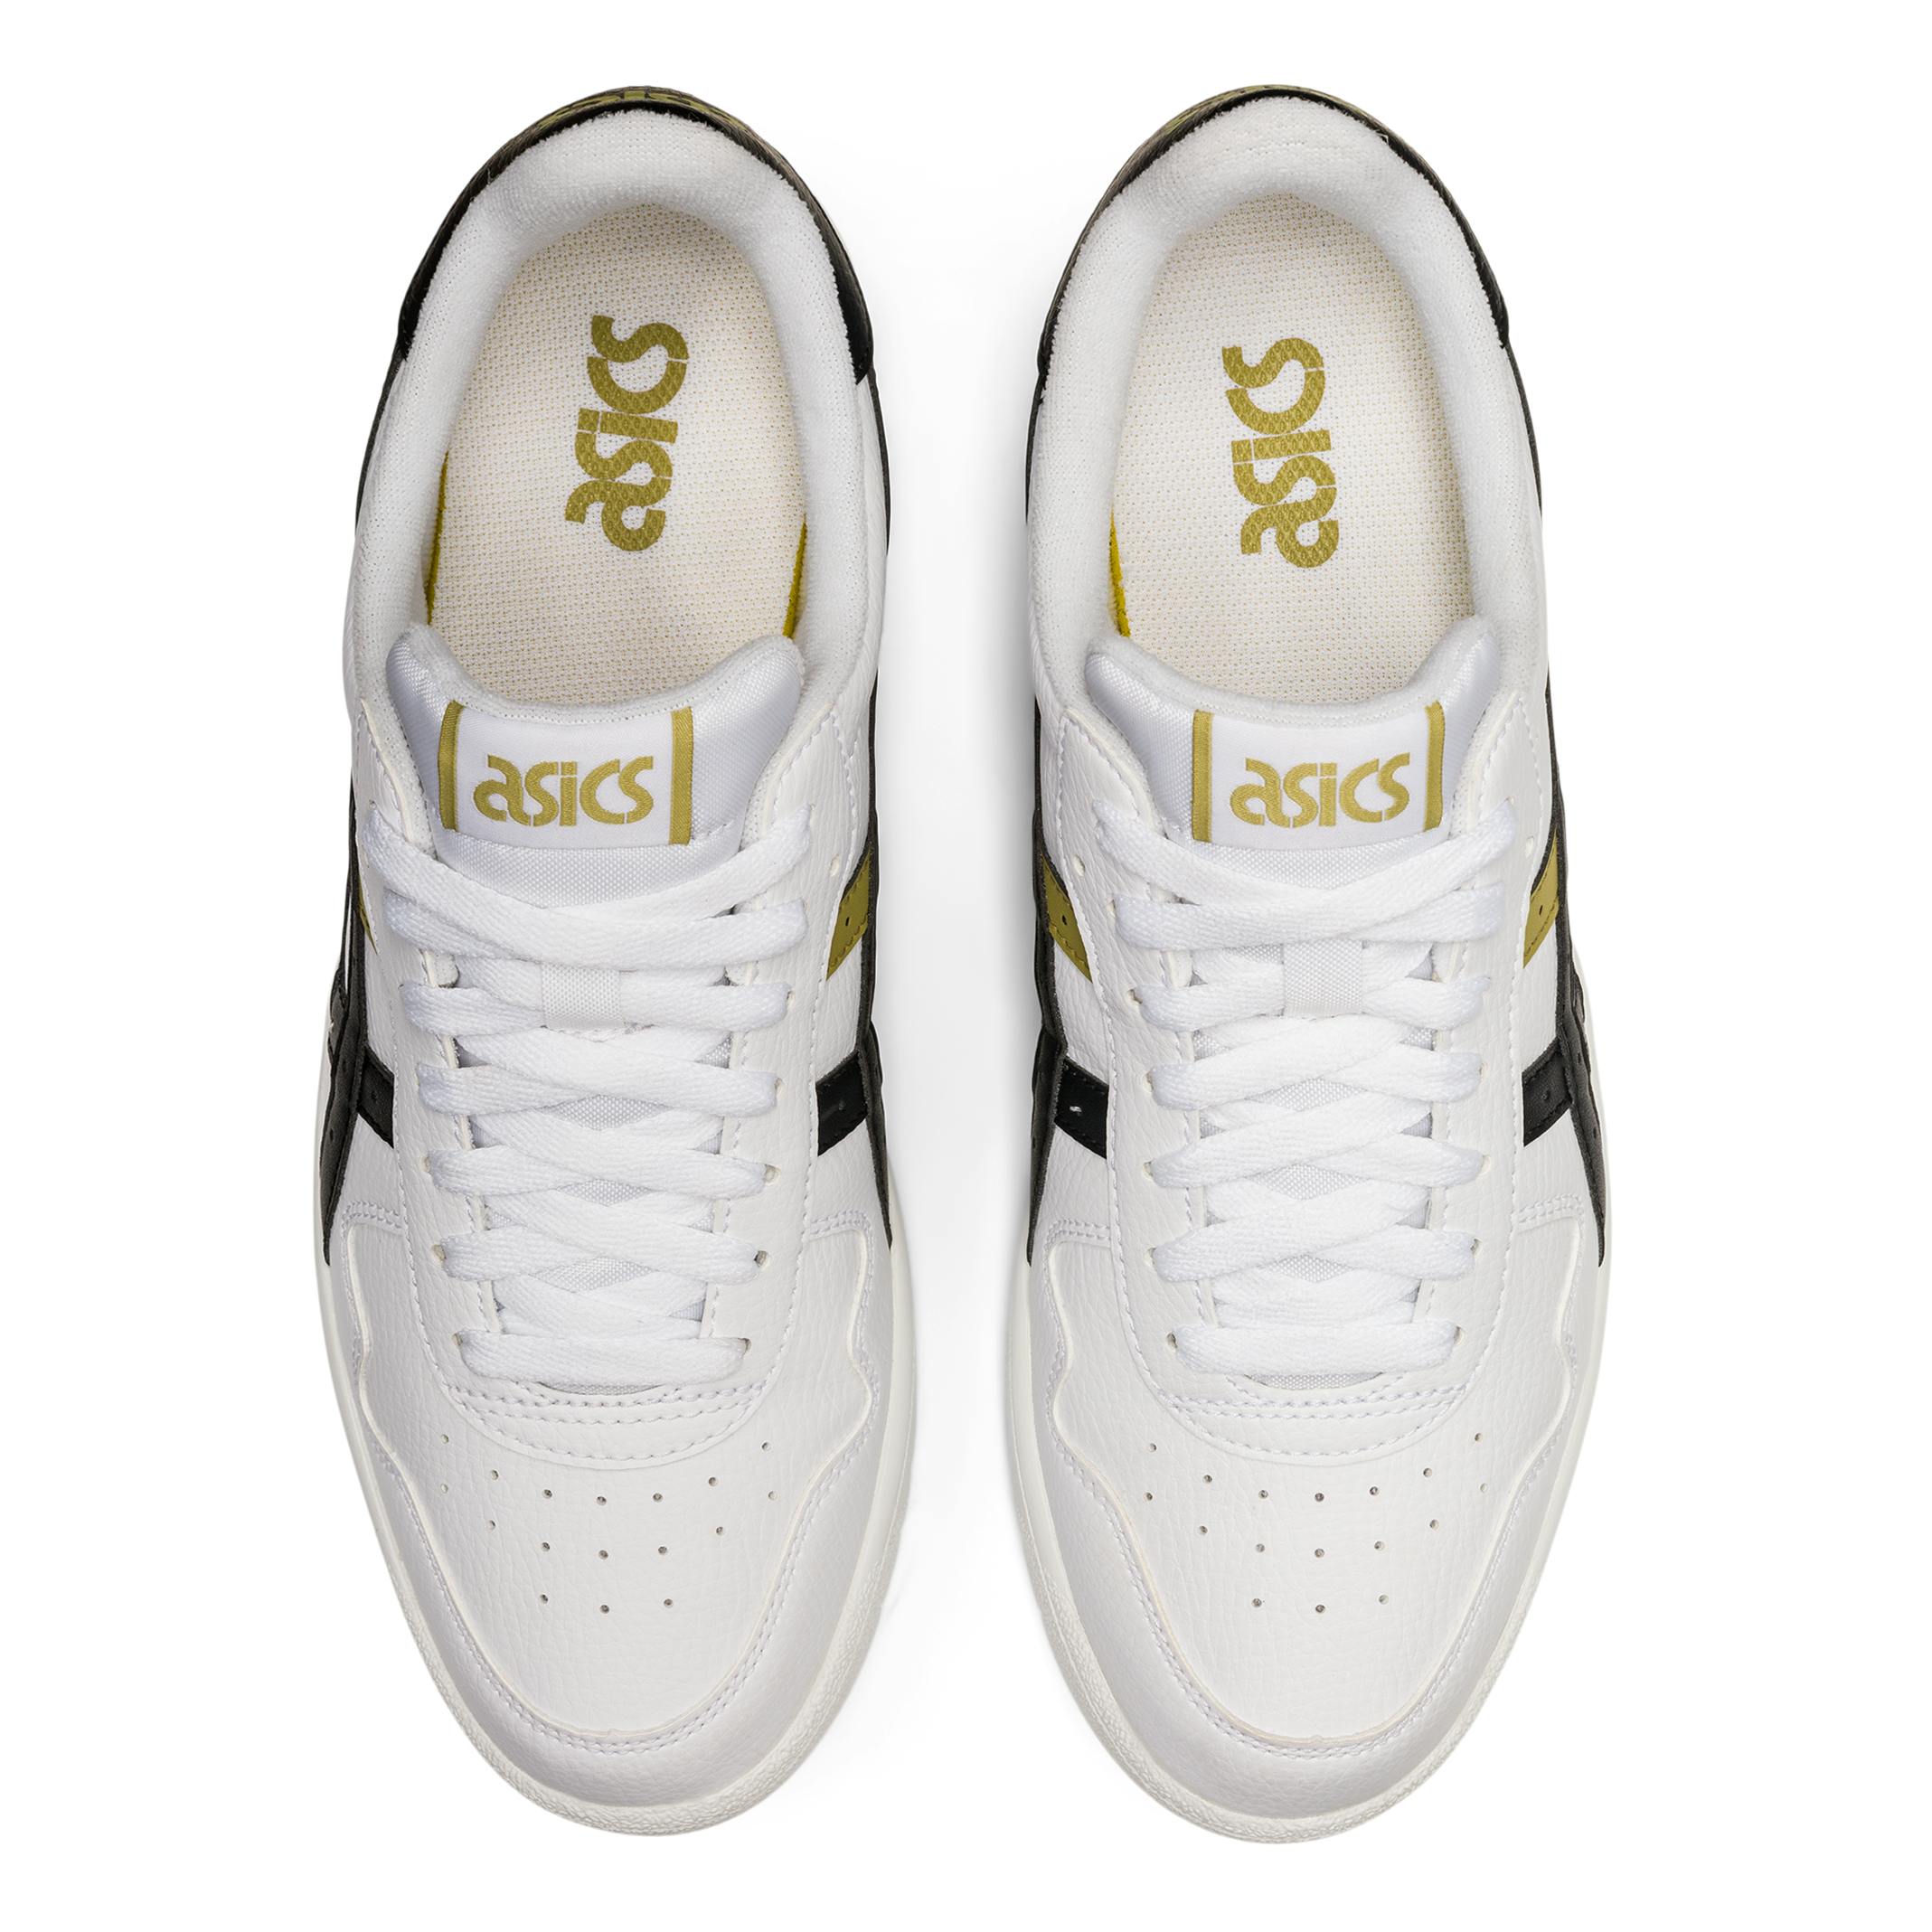 Asics S - White/Black | Sneakers |